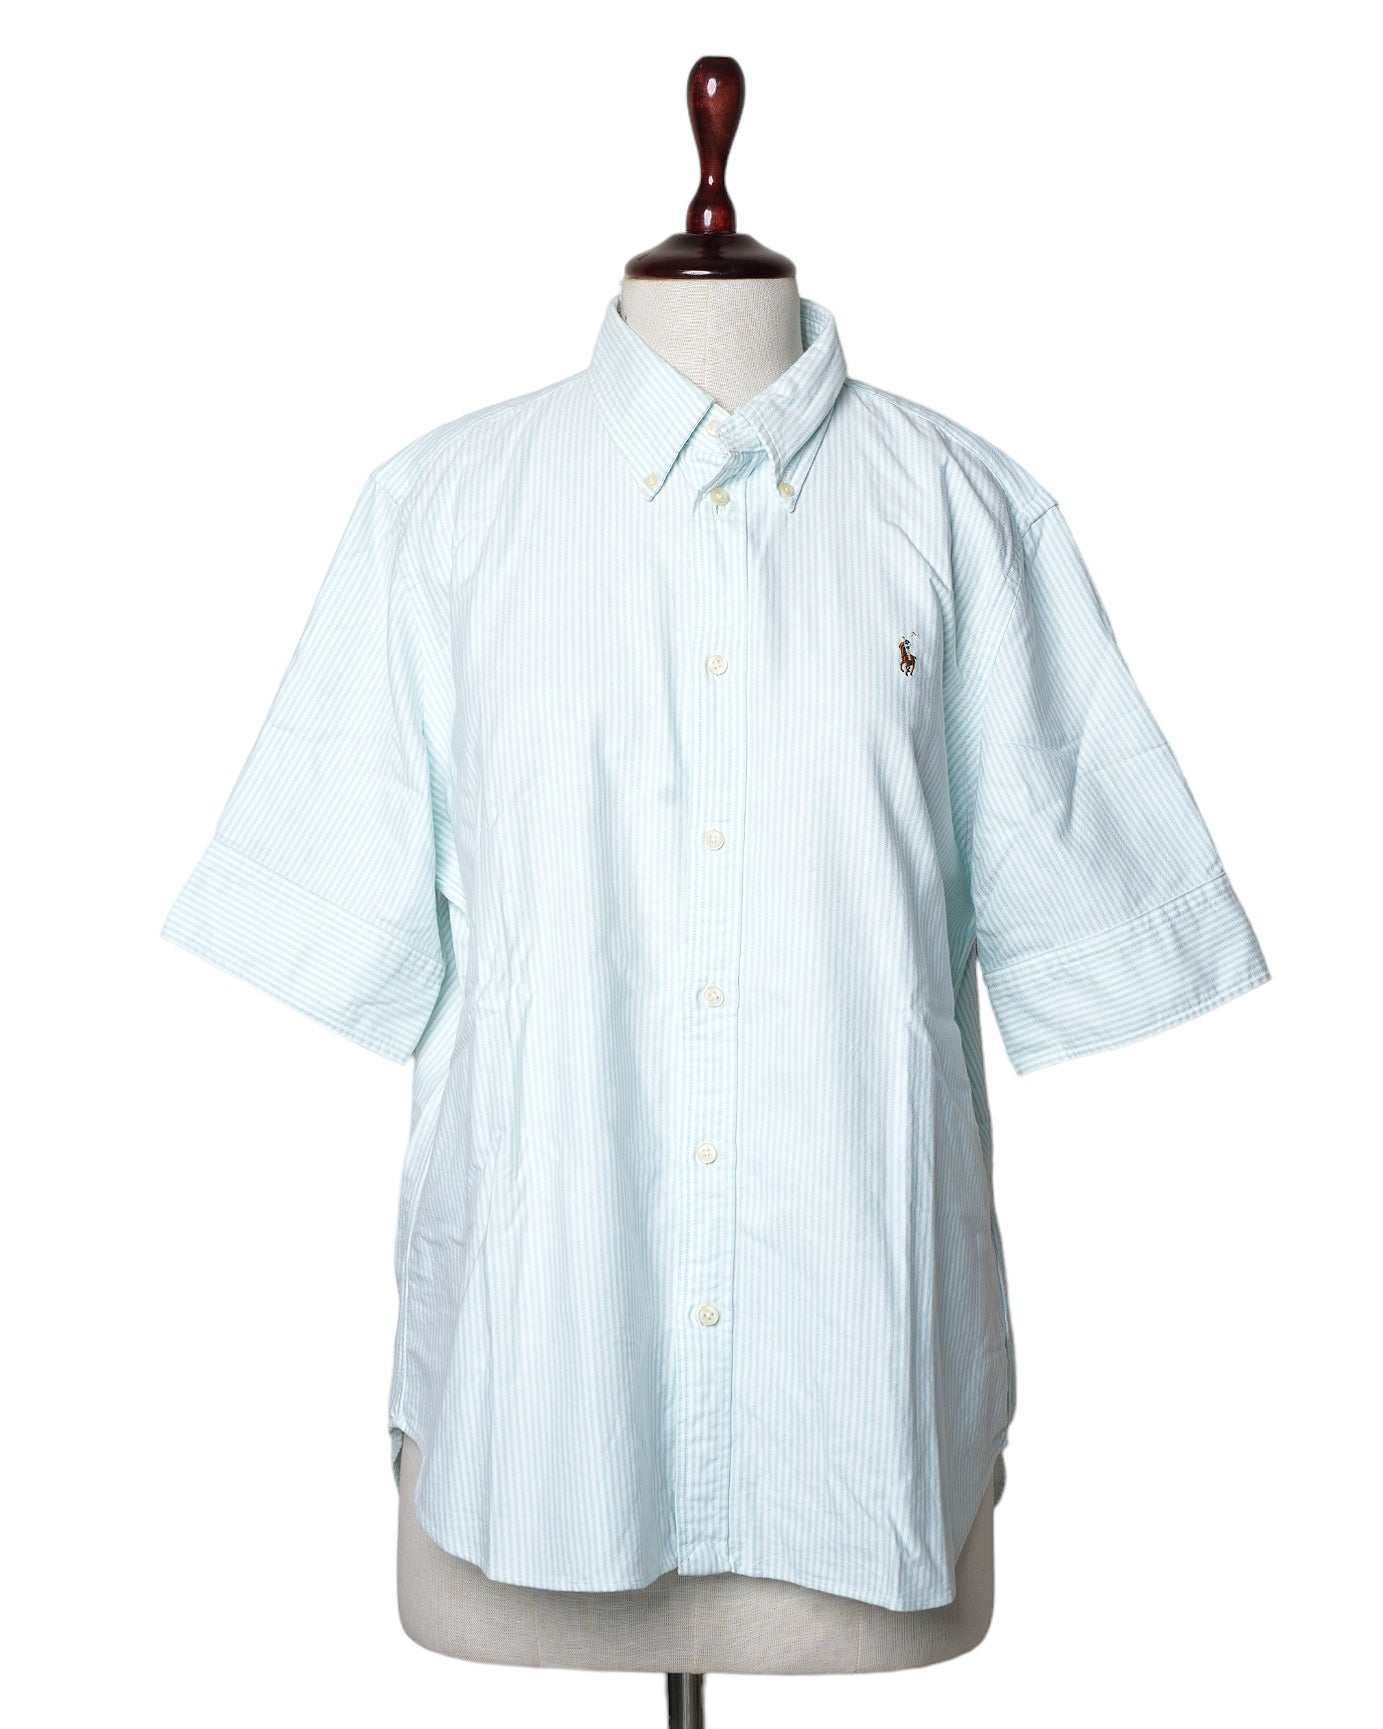 Ralph Lauren Blue & White Shirt Half Sleeves